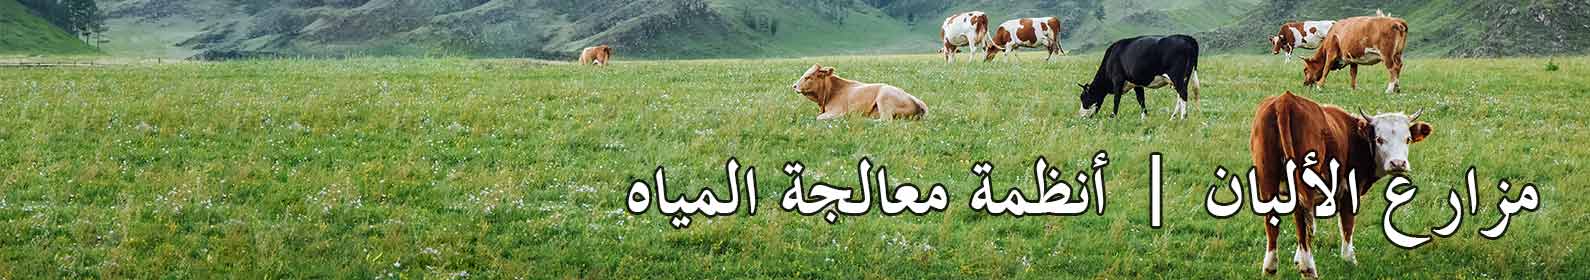 arabic-dairy-water-banner.jpg